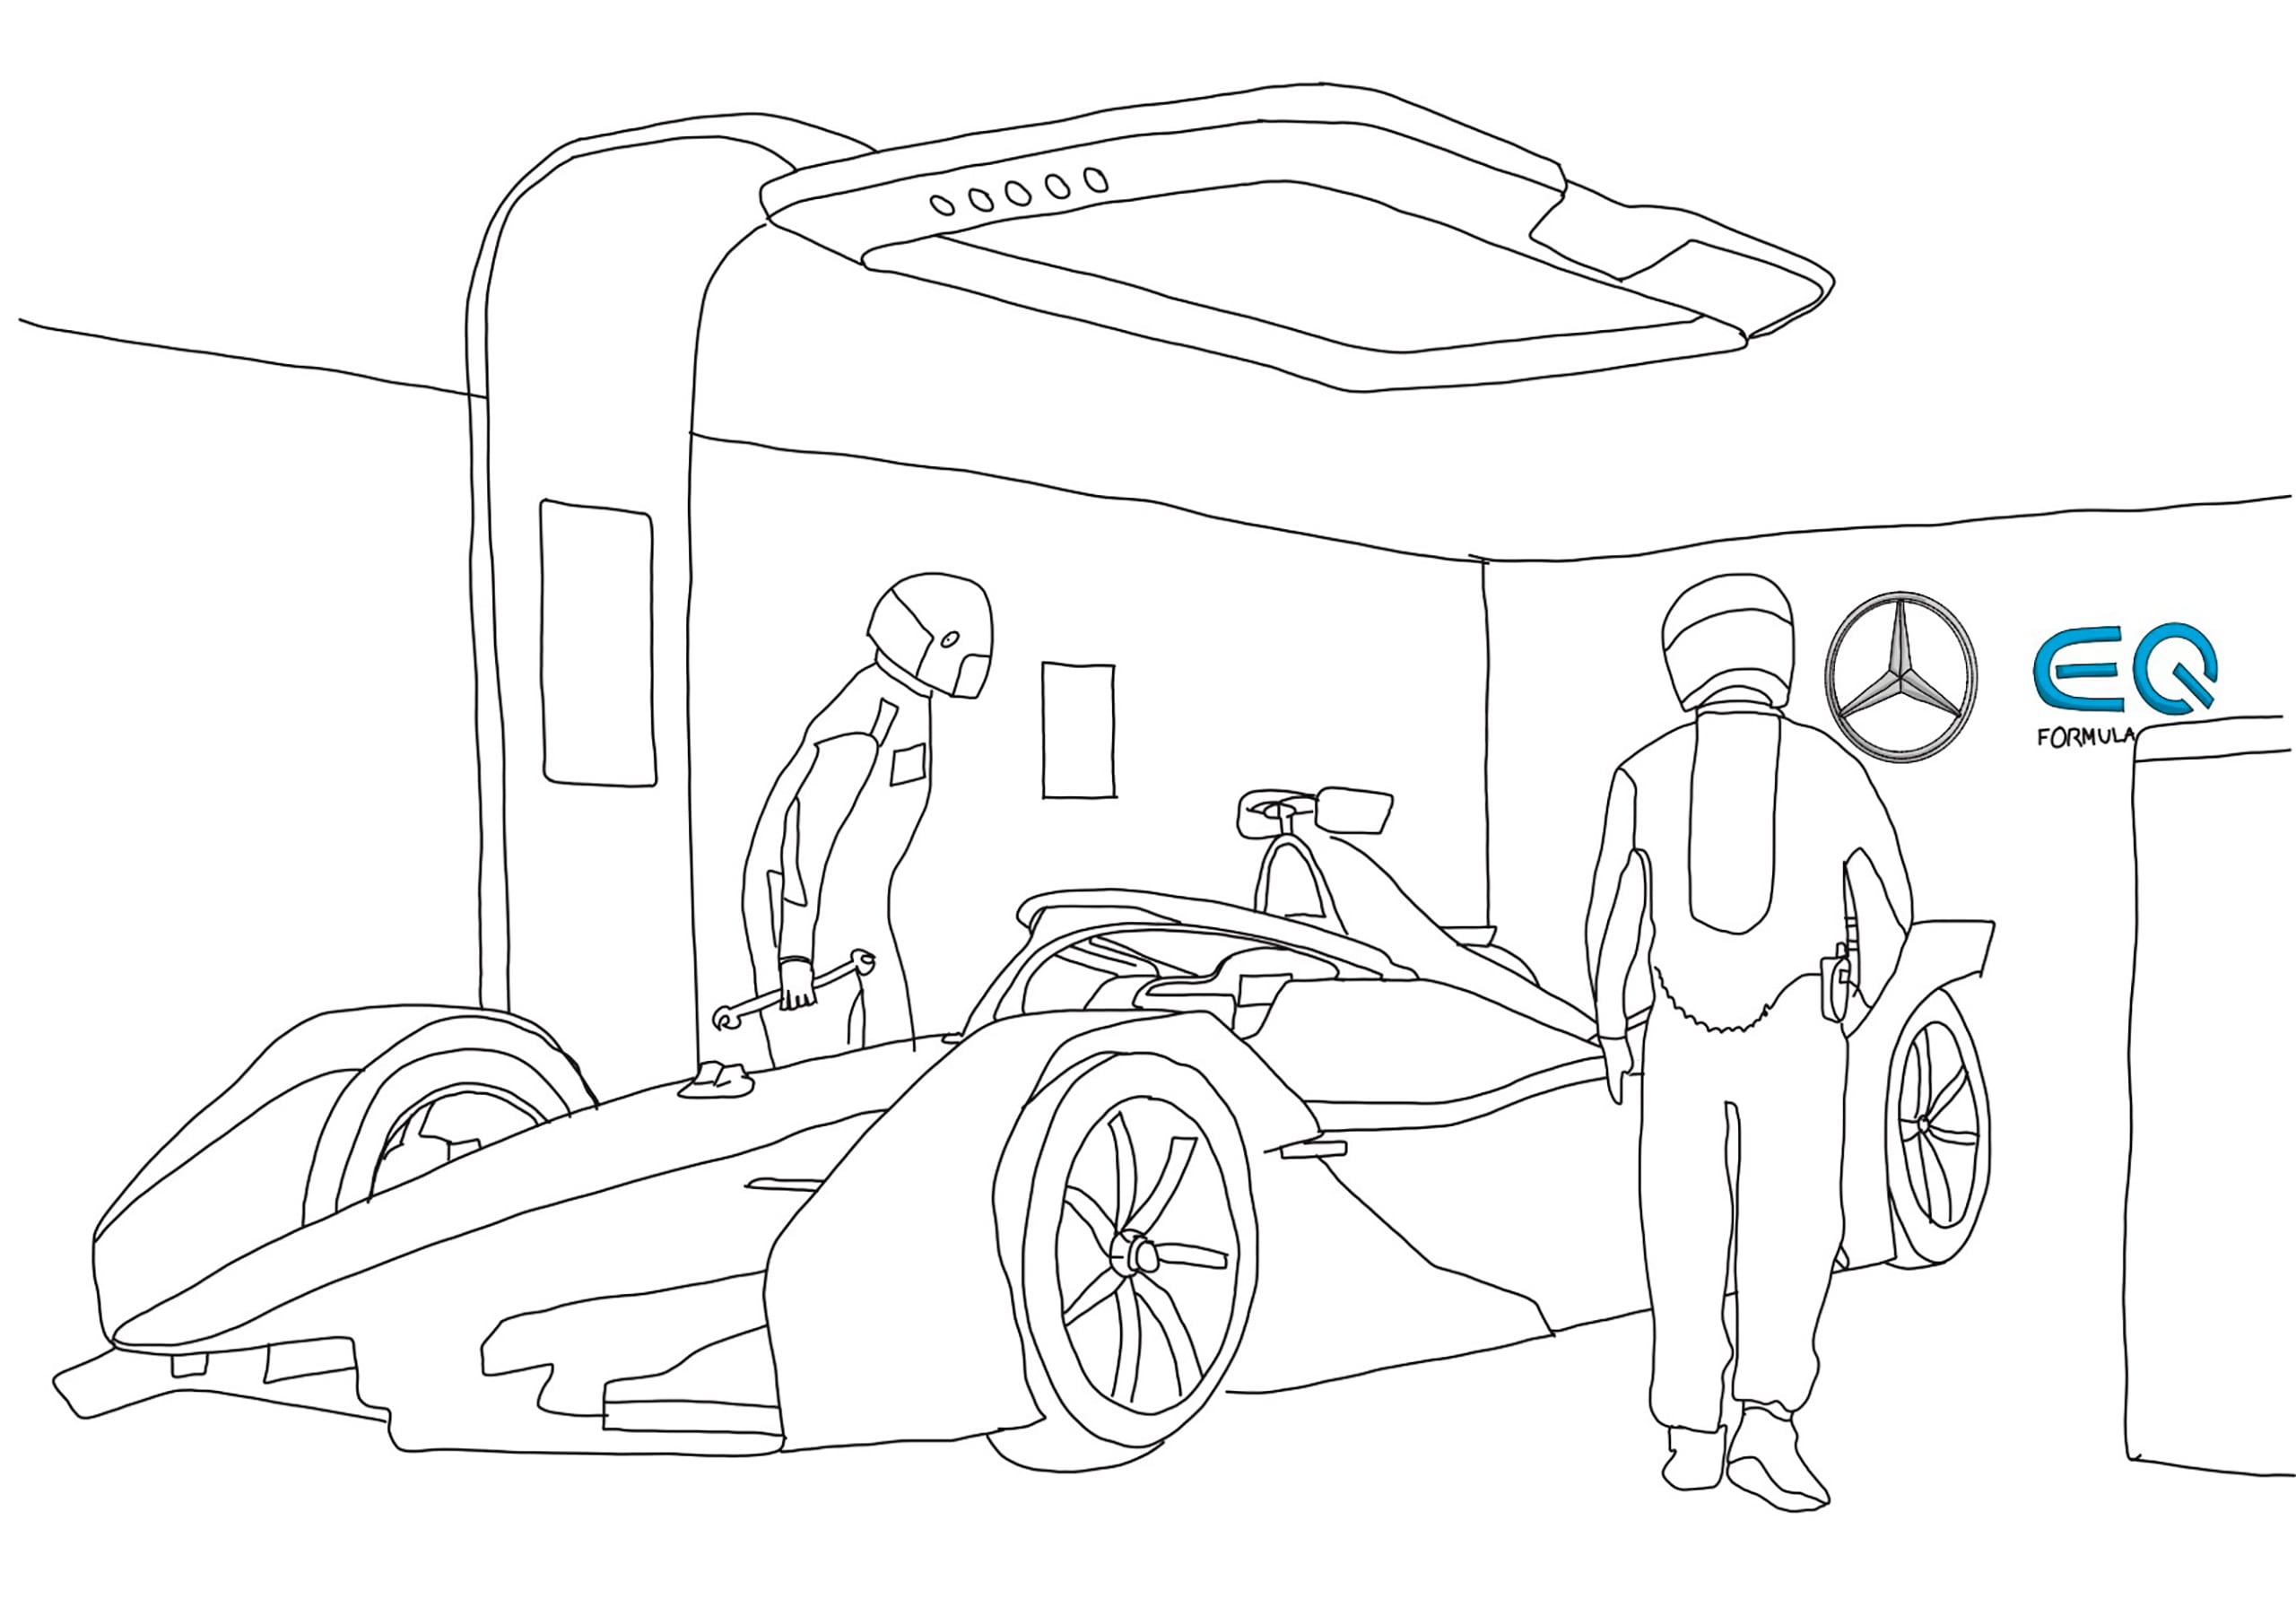 Mercedes-Benz design sketches.